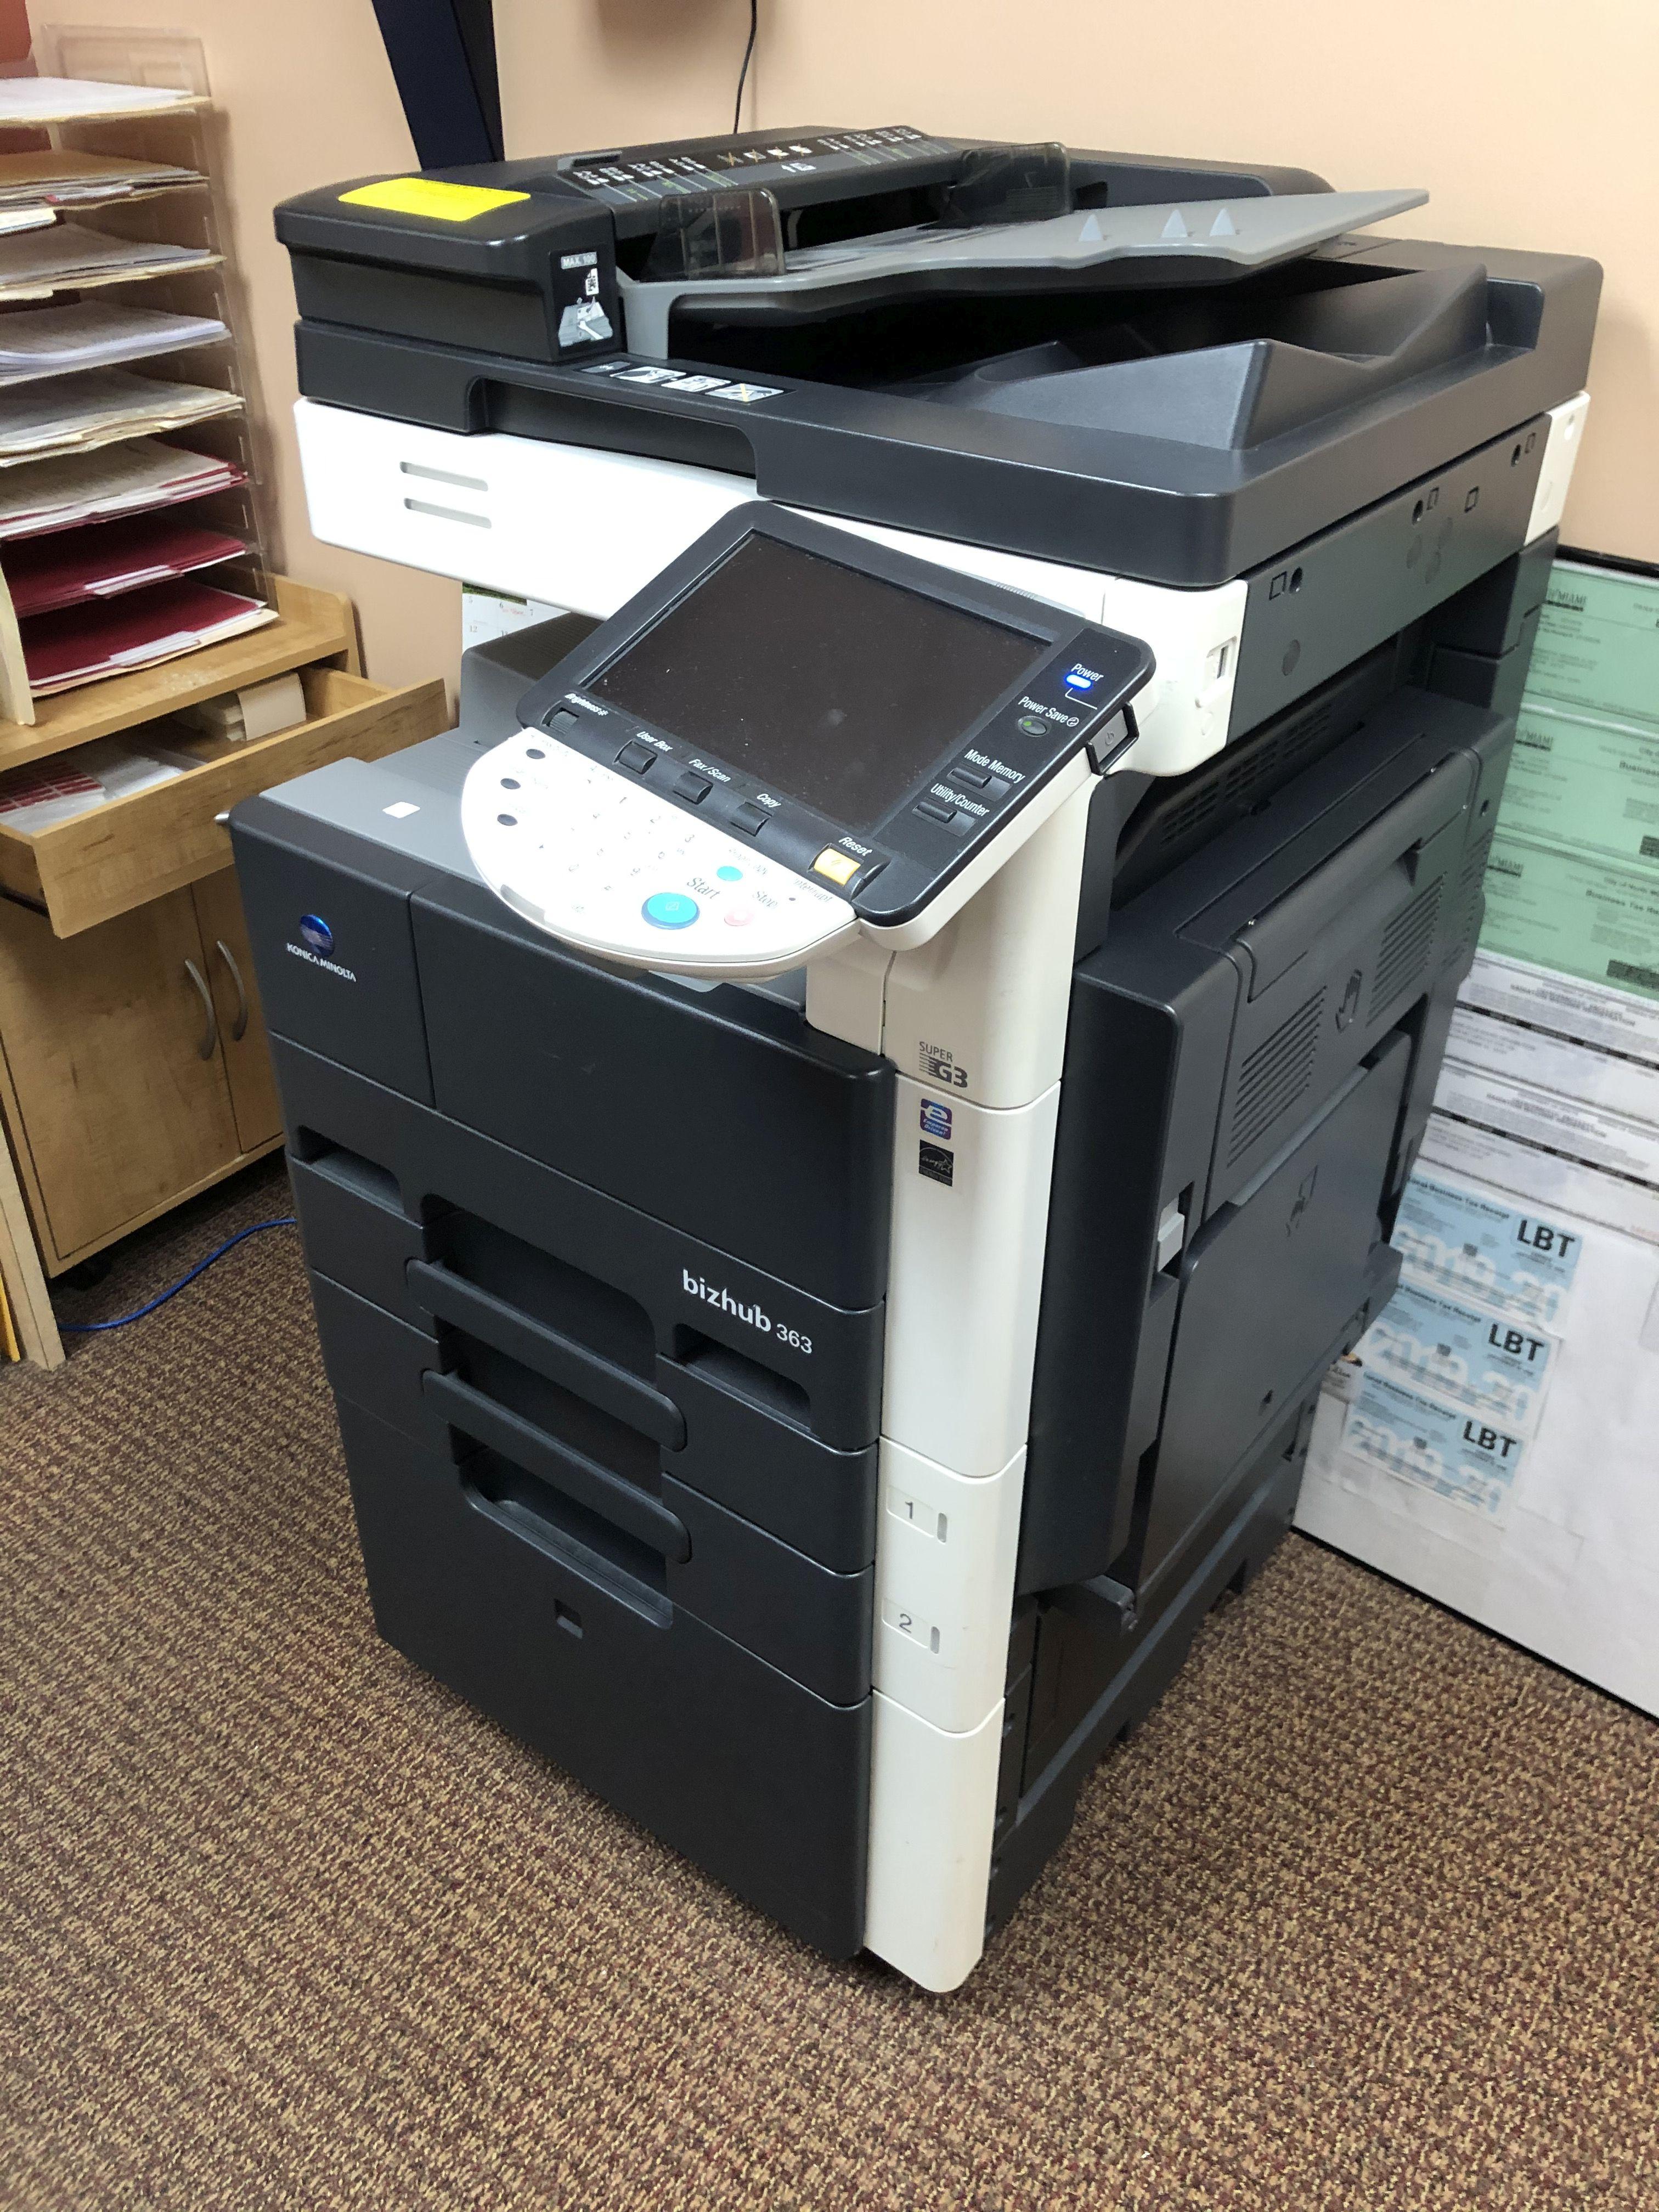 Konica Minolta BizHub 363 Black & White Copier Printer Scanner Fax